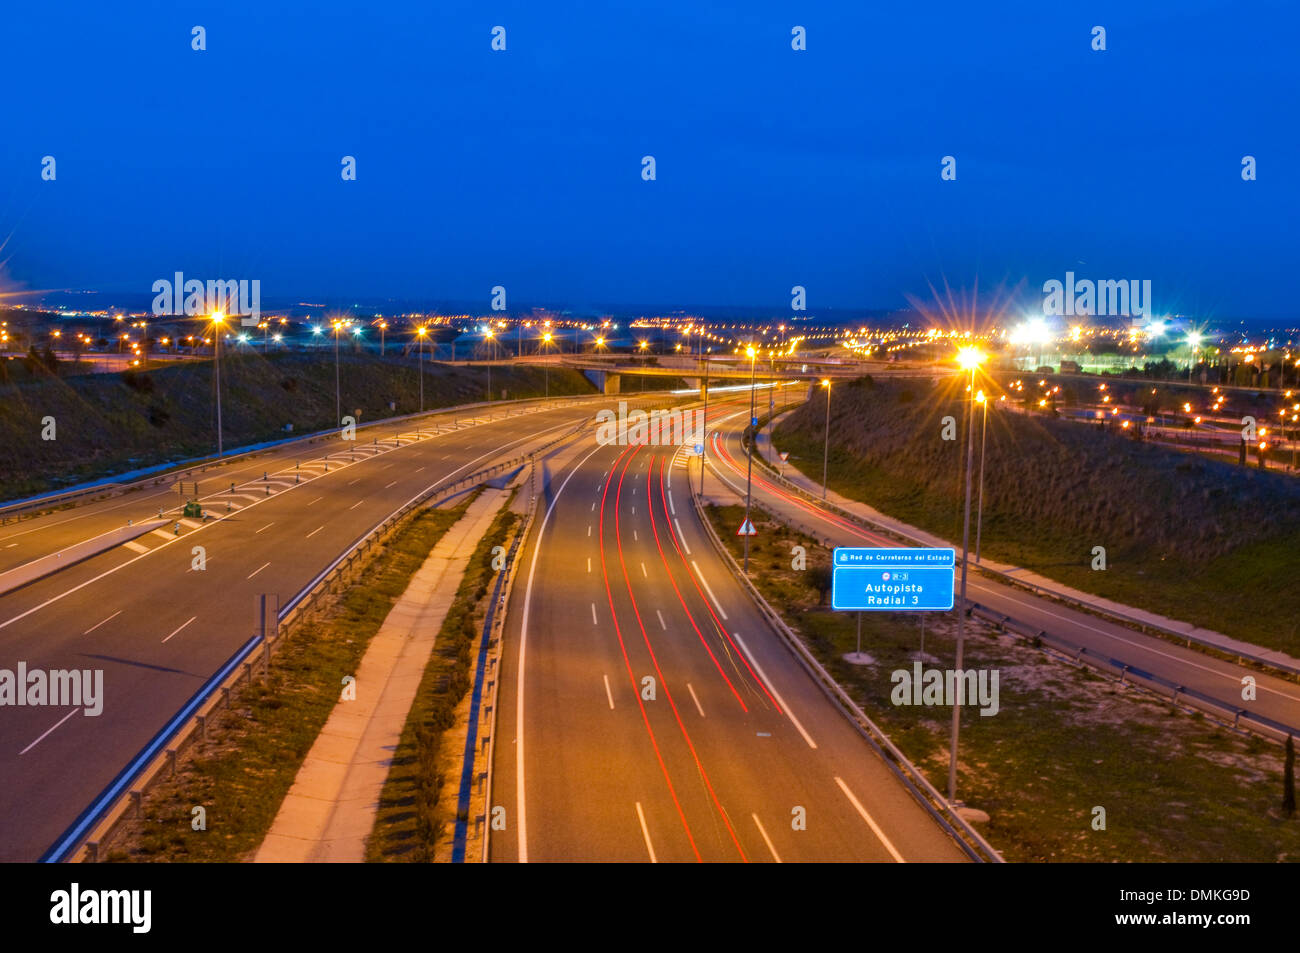 Radial 3 toll motorway, night view. Madrid, Spain. Stock Photo